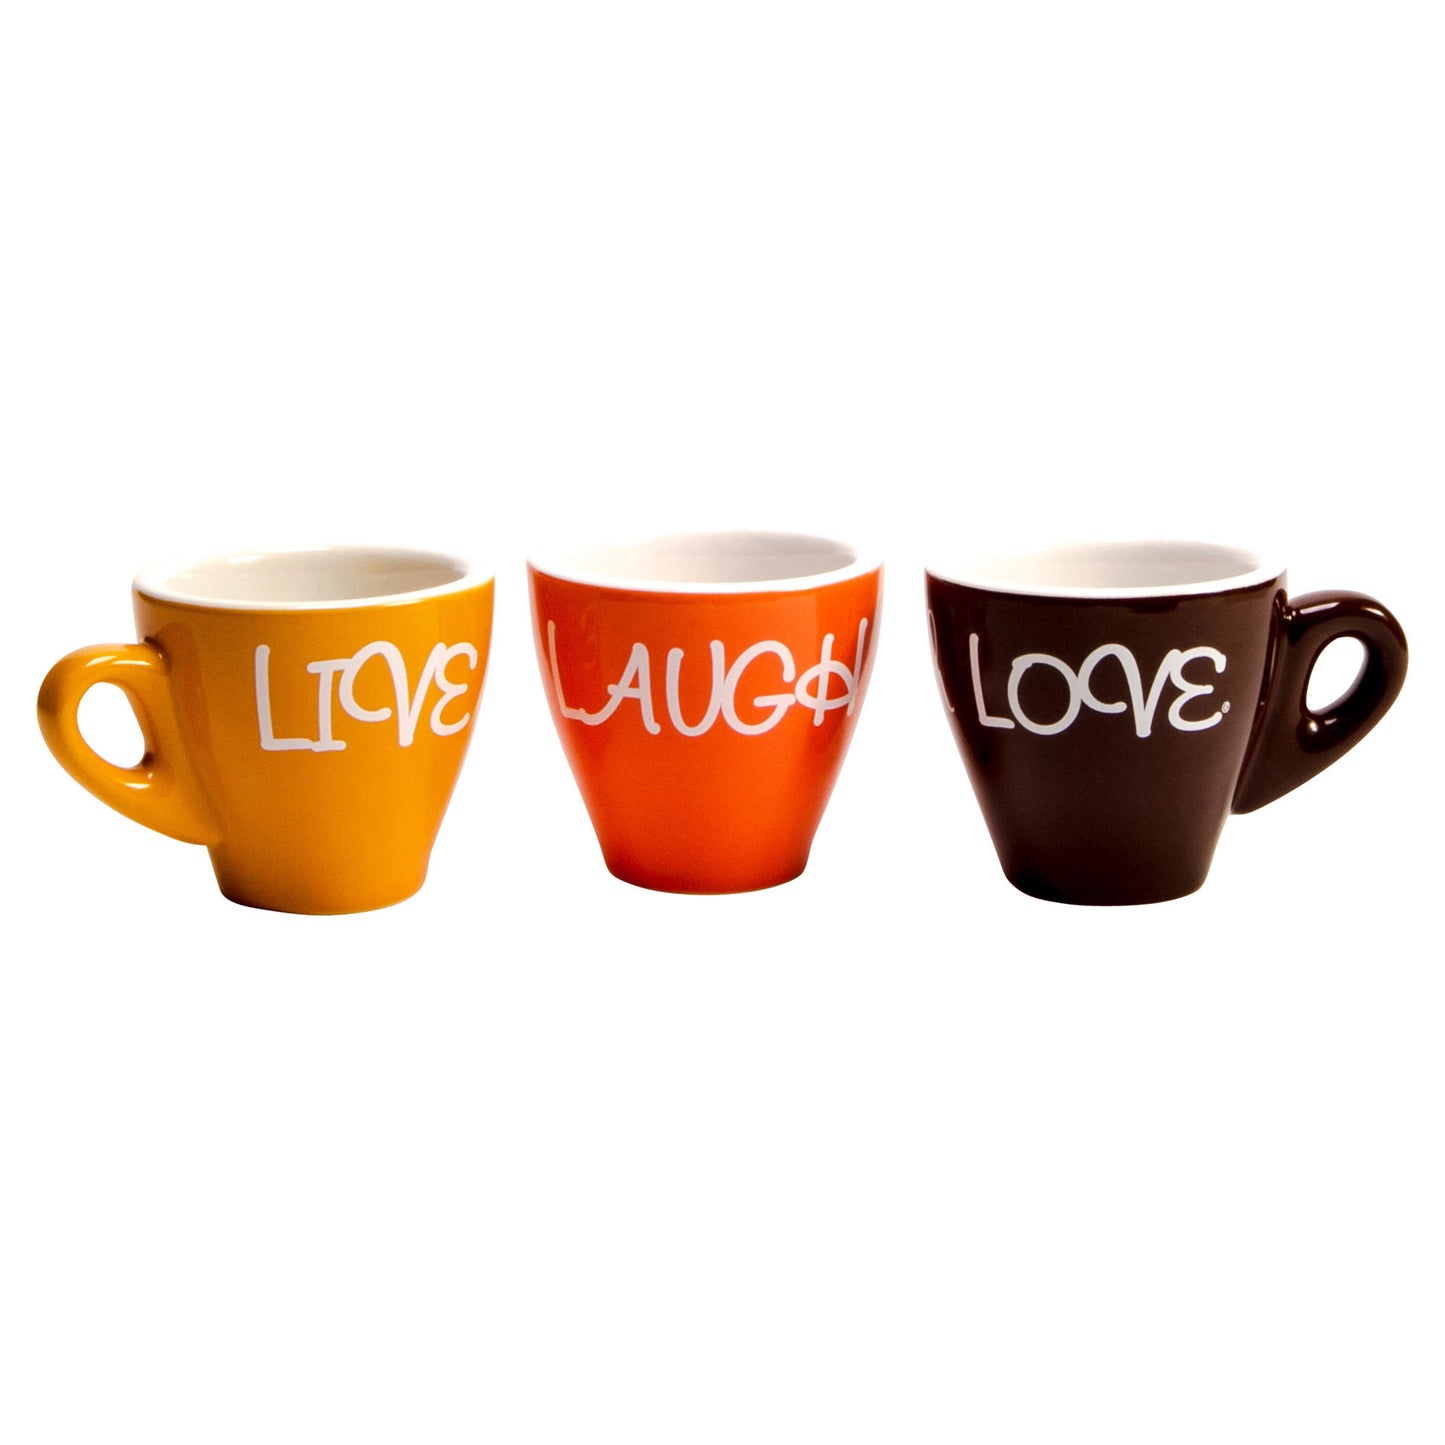 Shots of Love Espresso Trio of coffee demi-tas by Handmade Laugh Love®